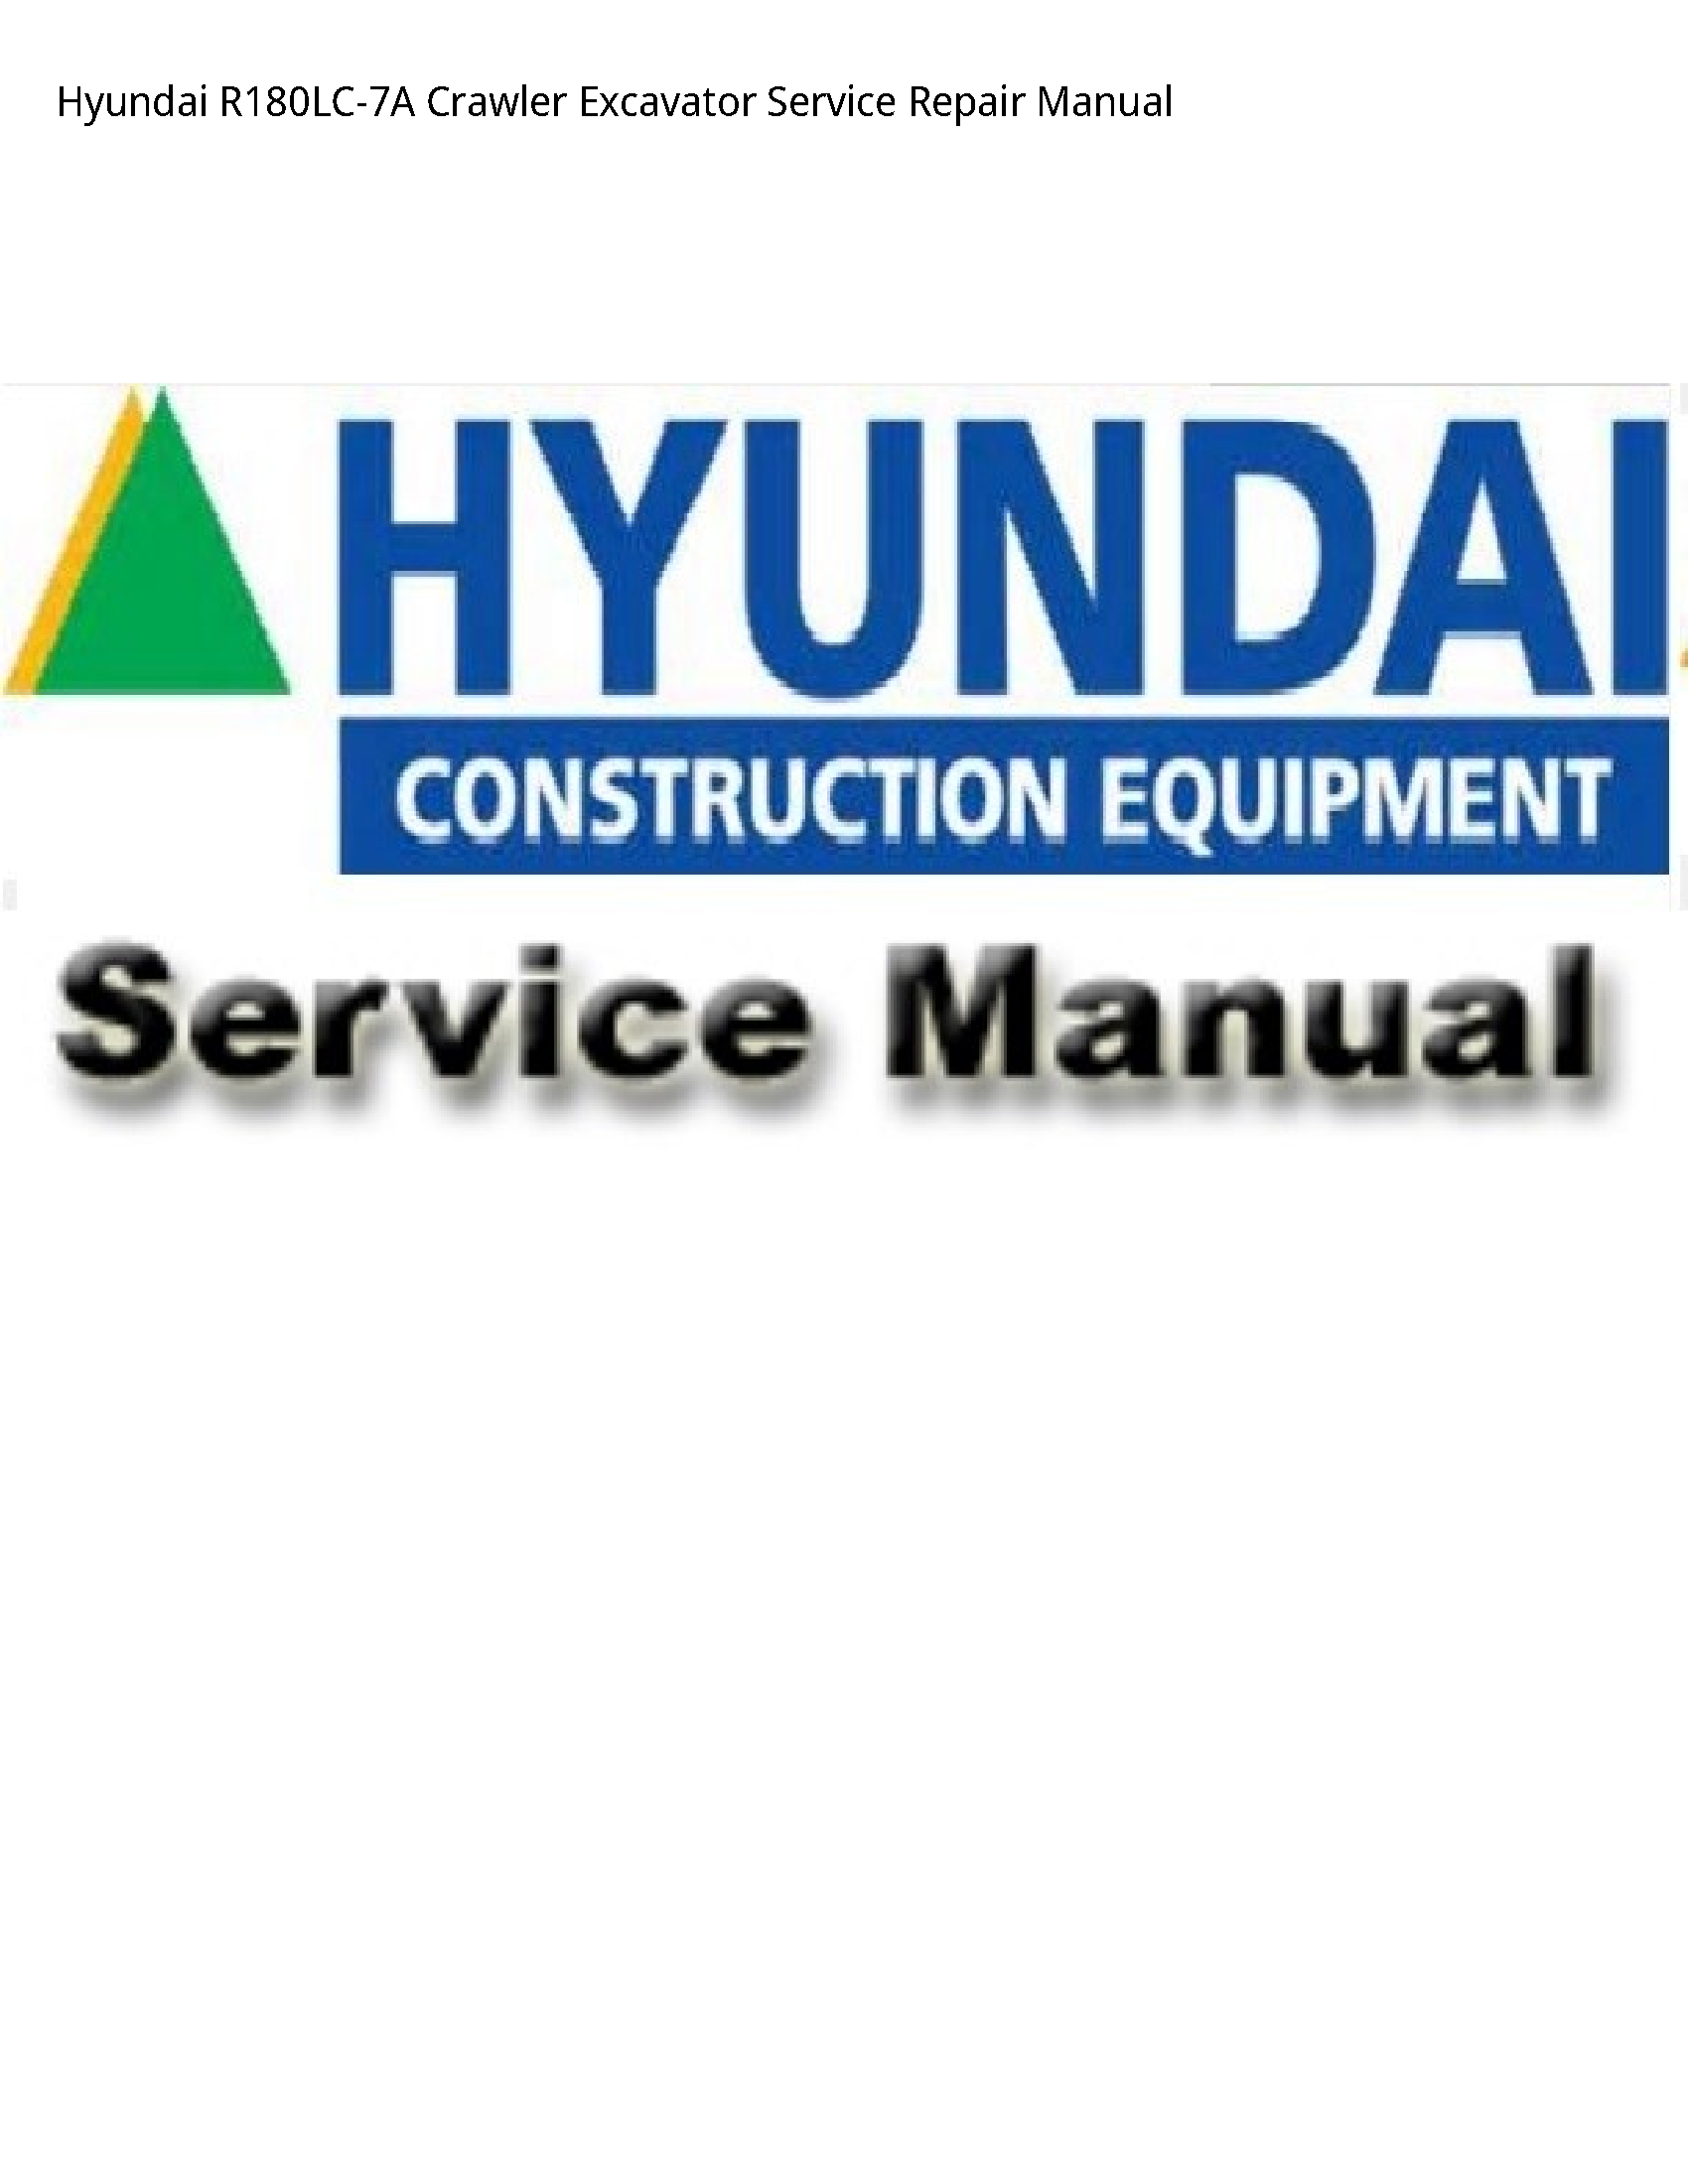 Hyundai R180LC-7A Crawler Excavator manual